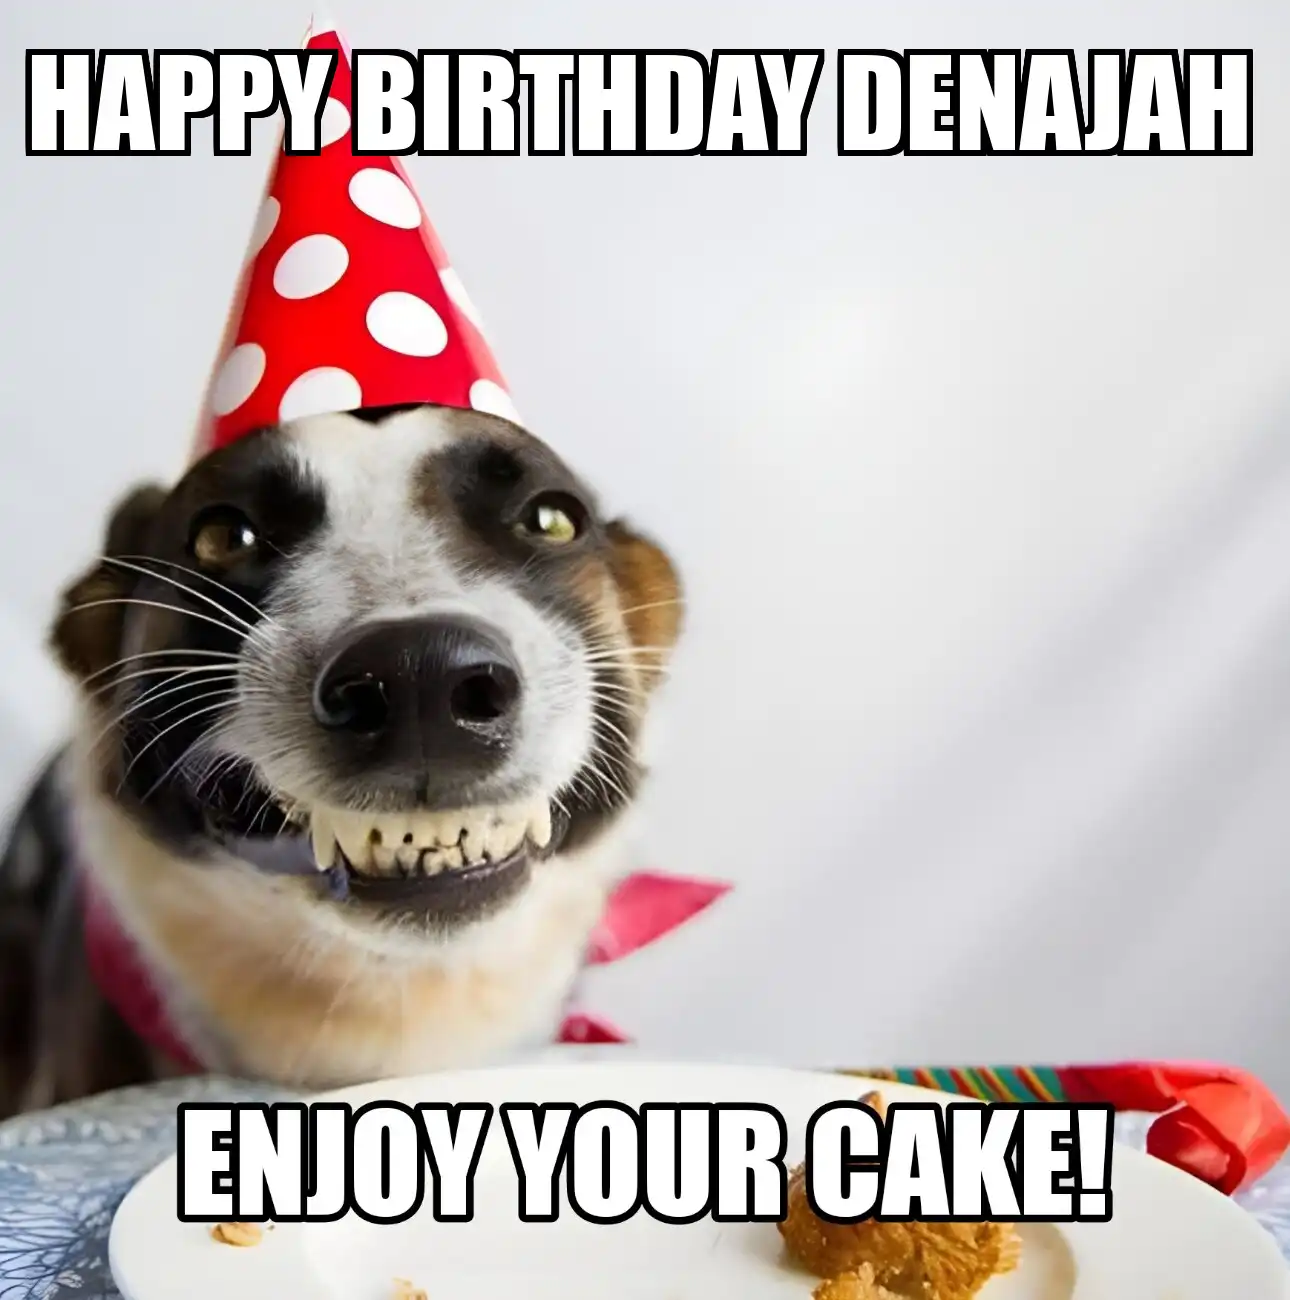 Happy Birthday Denajah Enjoy Your Cake Dog Meme